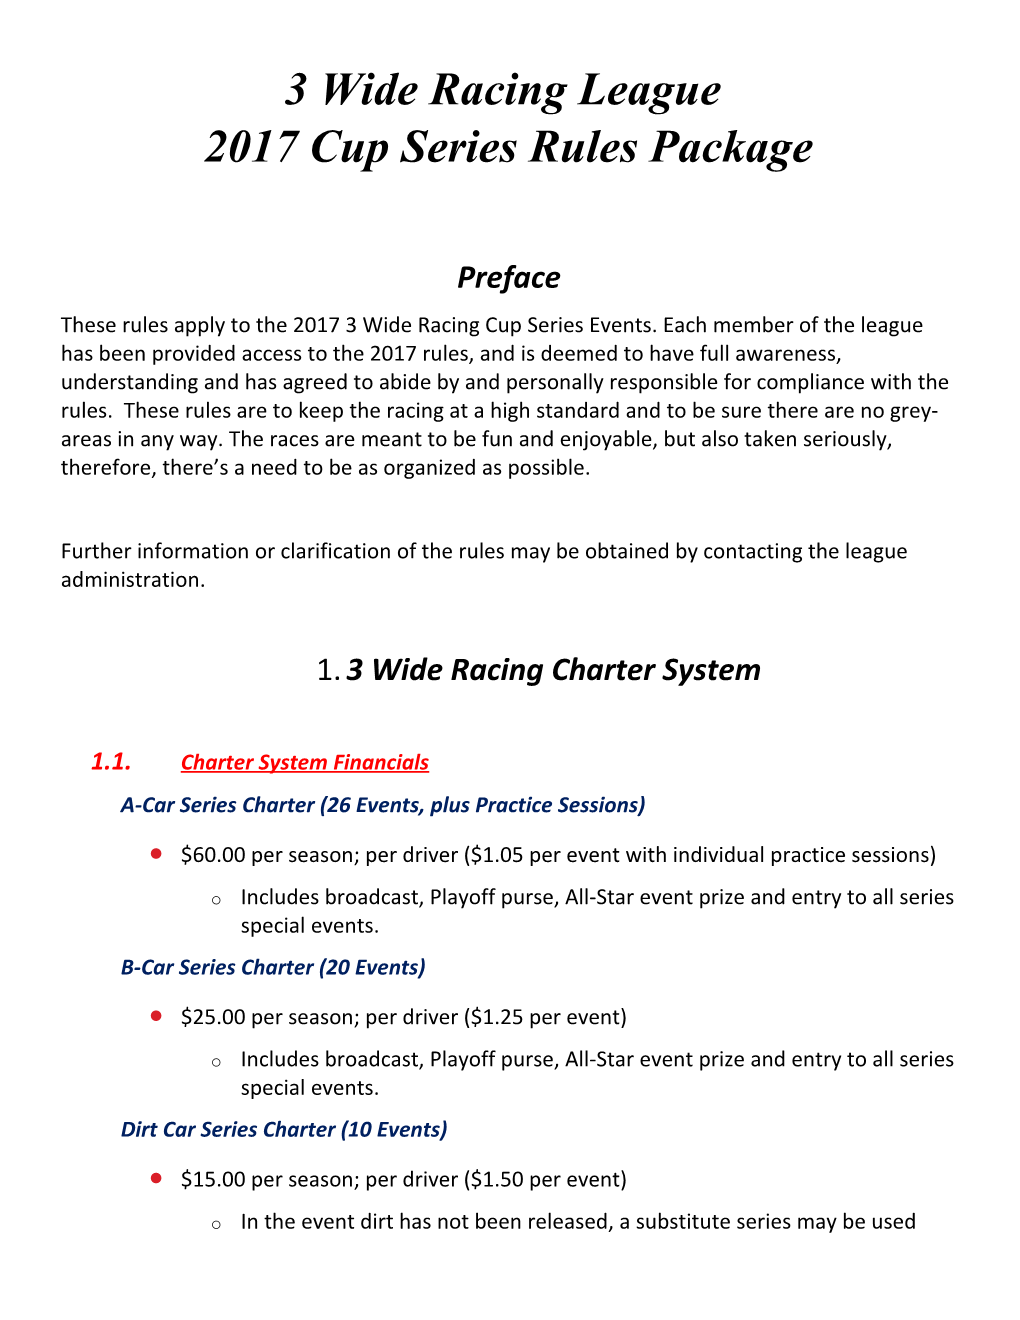 3 Wide Racing League 2017 Cup Series Rules Package